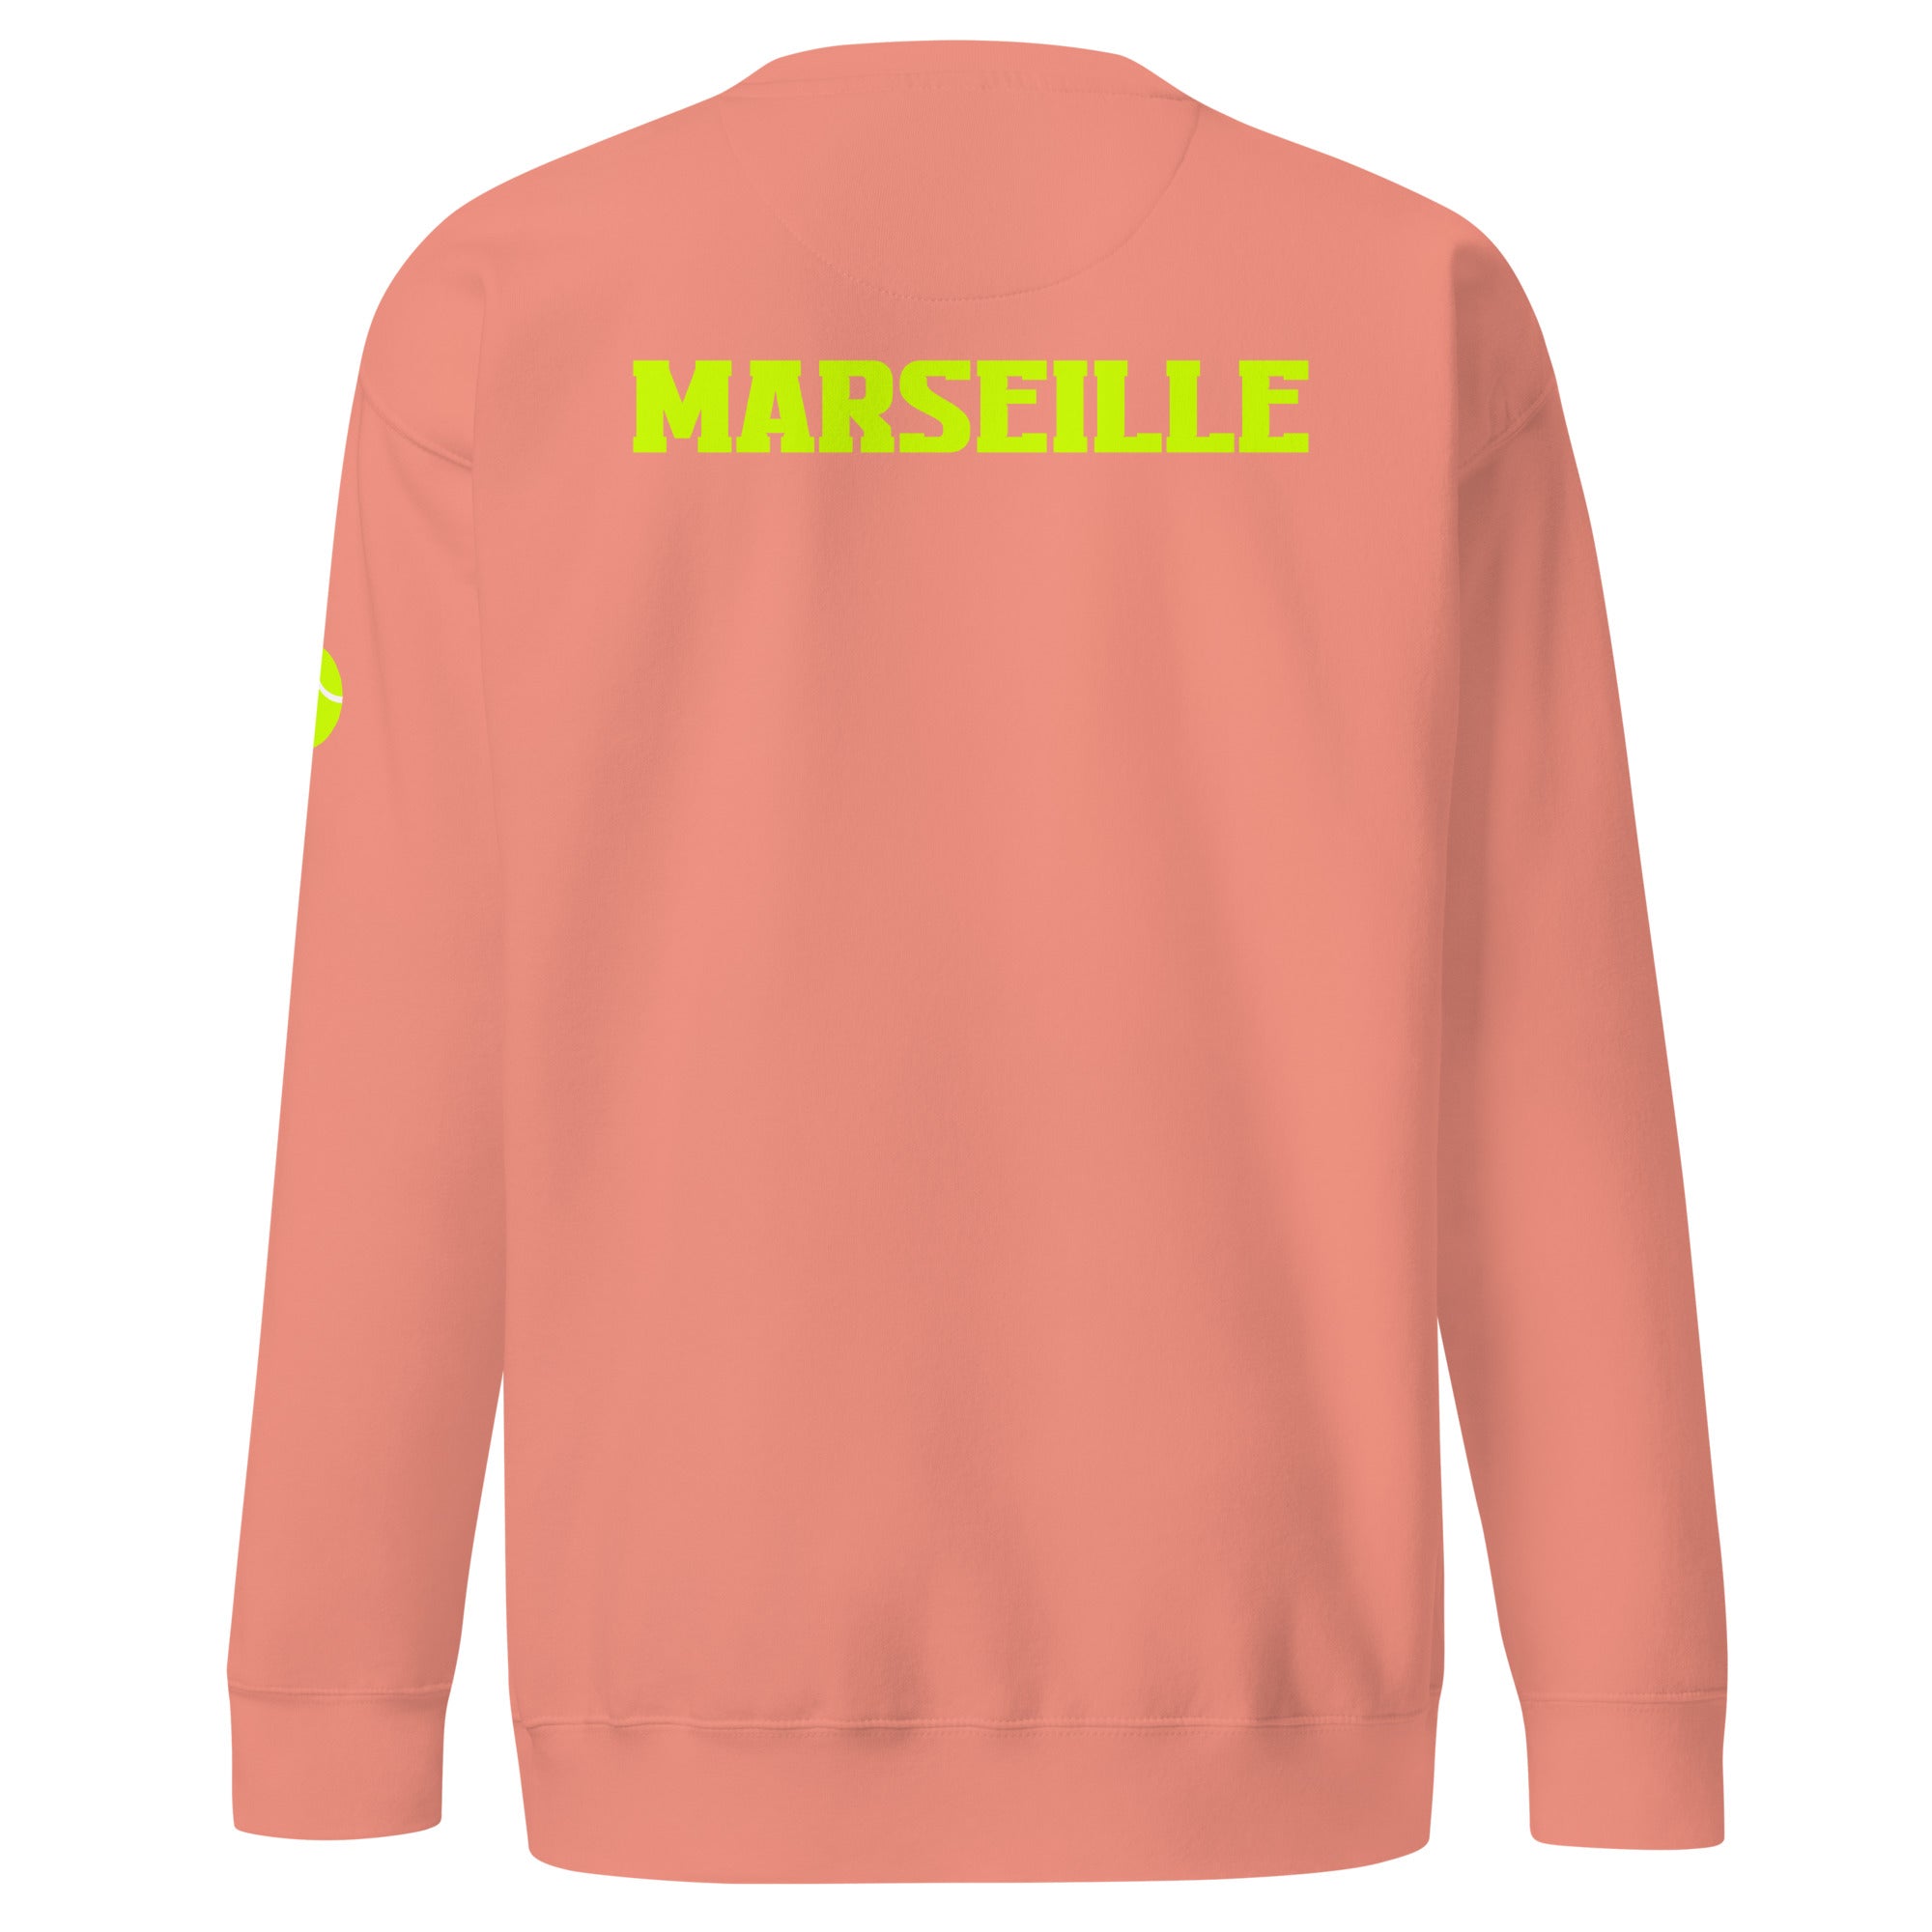 Unisex Premium Sweatshirt - Tennis Masters Marseille - GRAPHIC T-SHIRTS